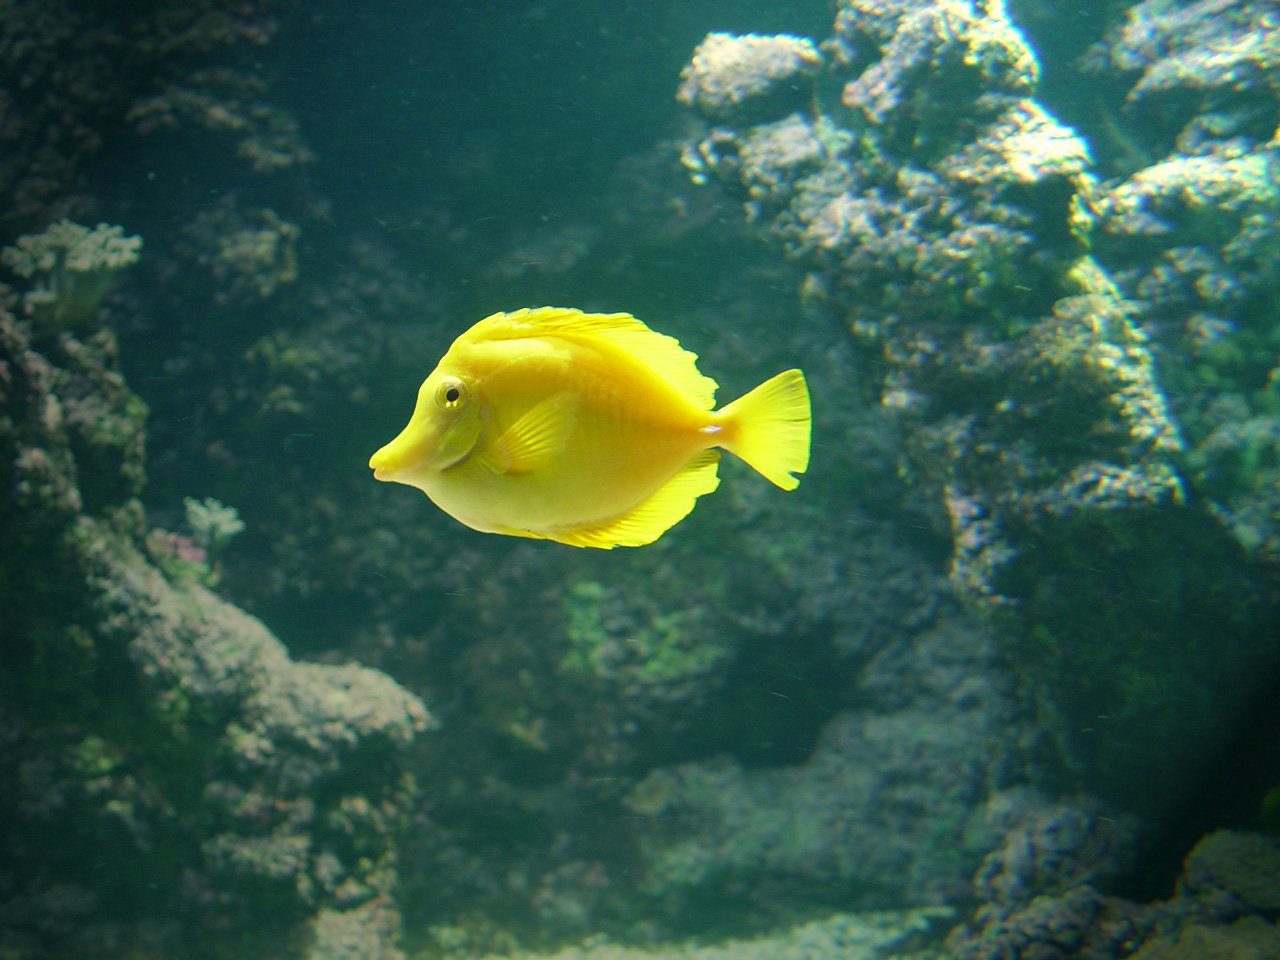 yellow fish swims underwater amongst algae in an aquarium